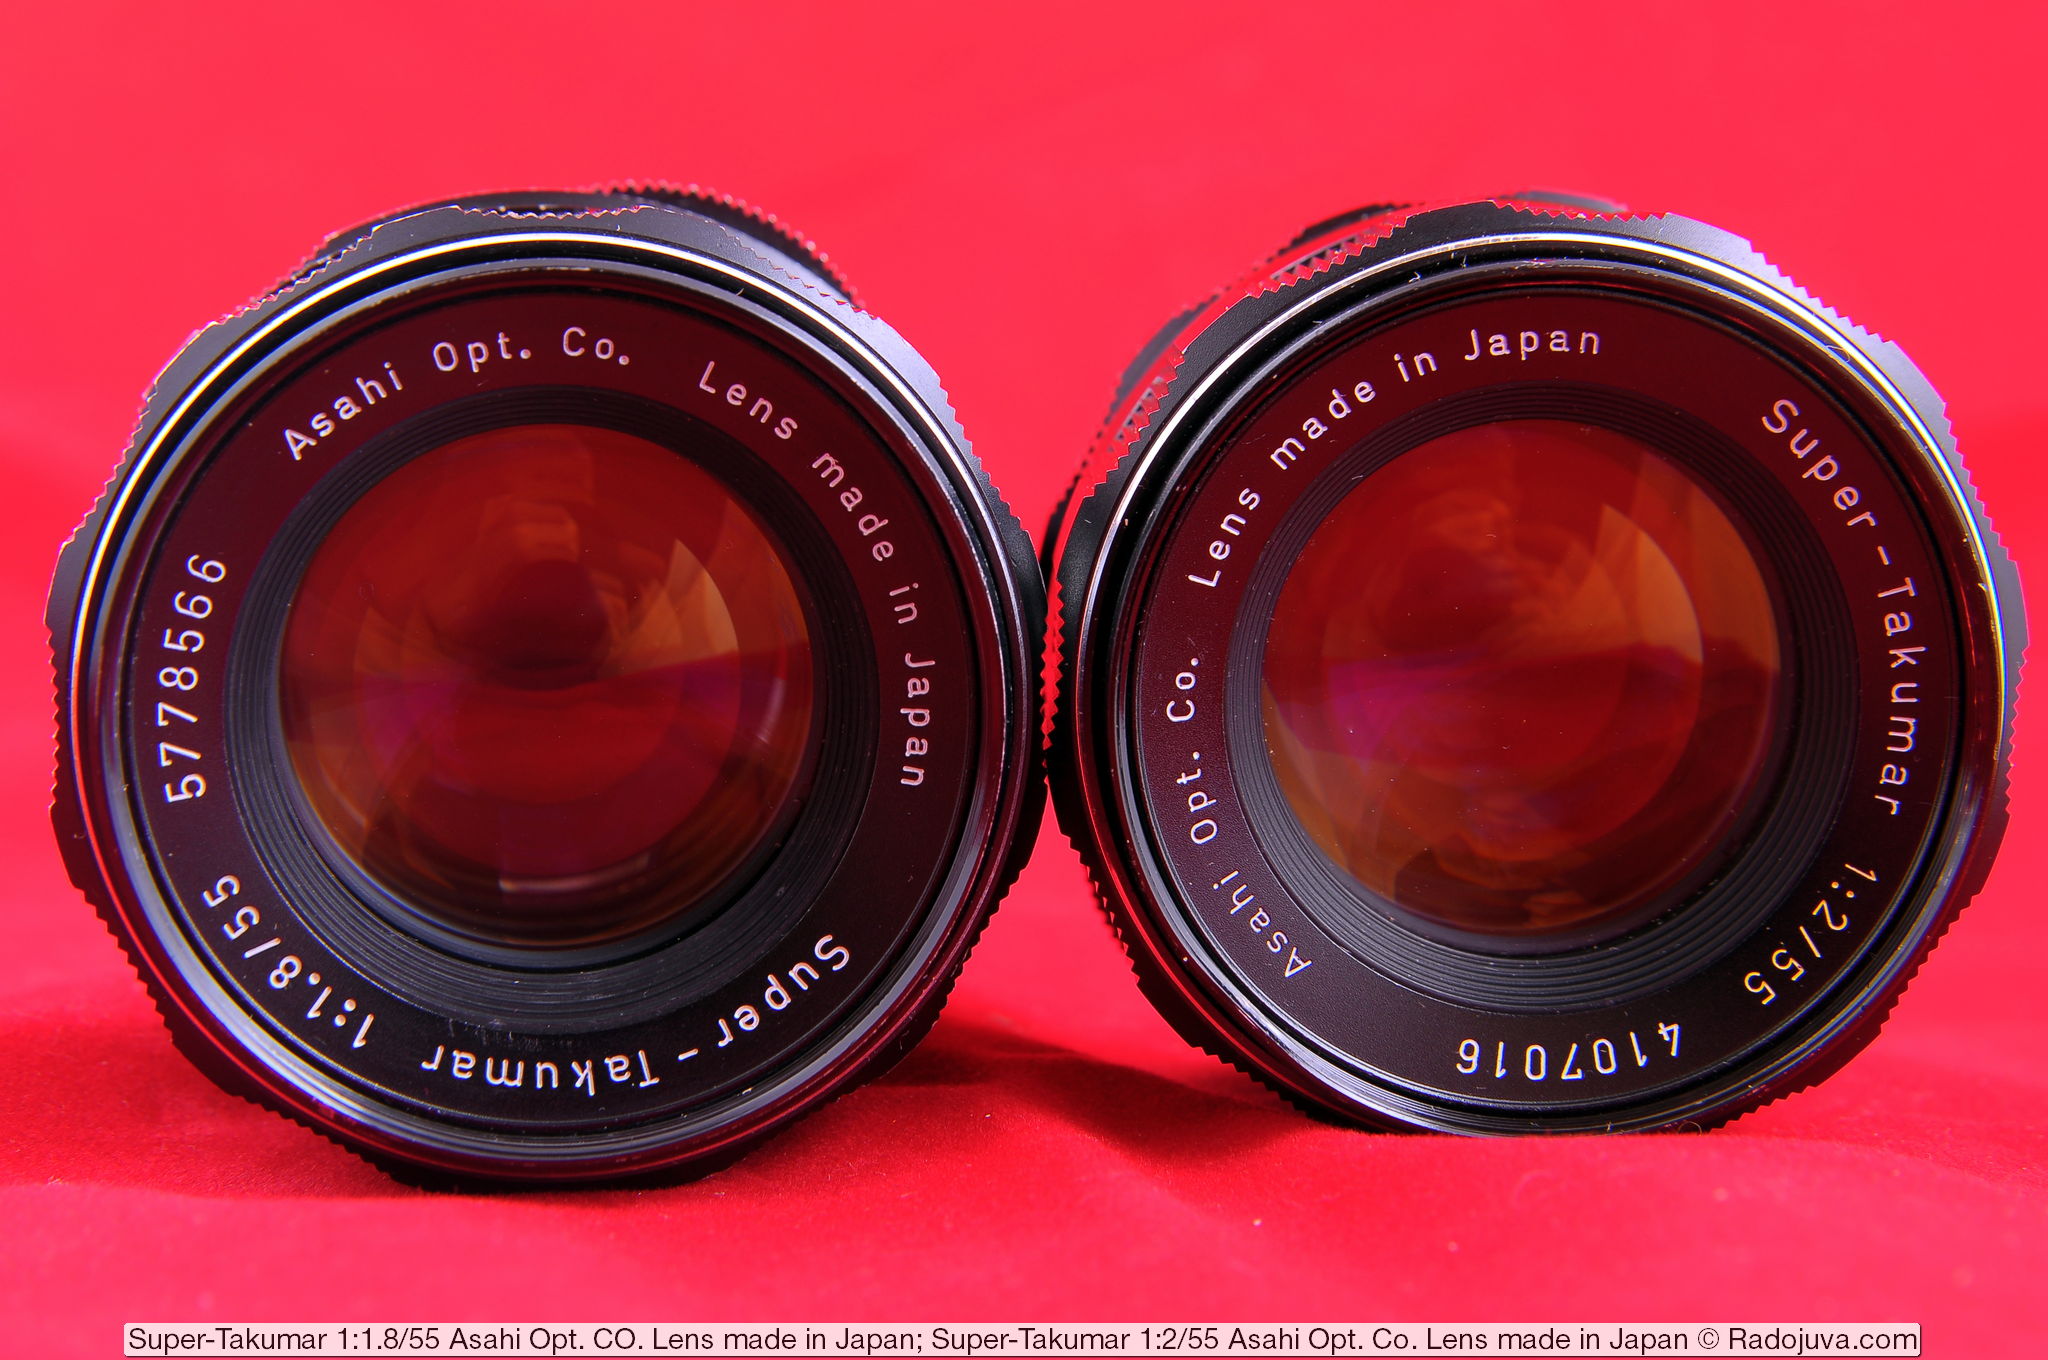  Объективы Super-Takumar 1:1.8/55 Asahi Opt. Co. Lens made in Japan и Super-Takumar 1:2/55 Asahi Opt. Co. Lens made in Japan